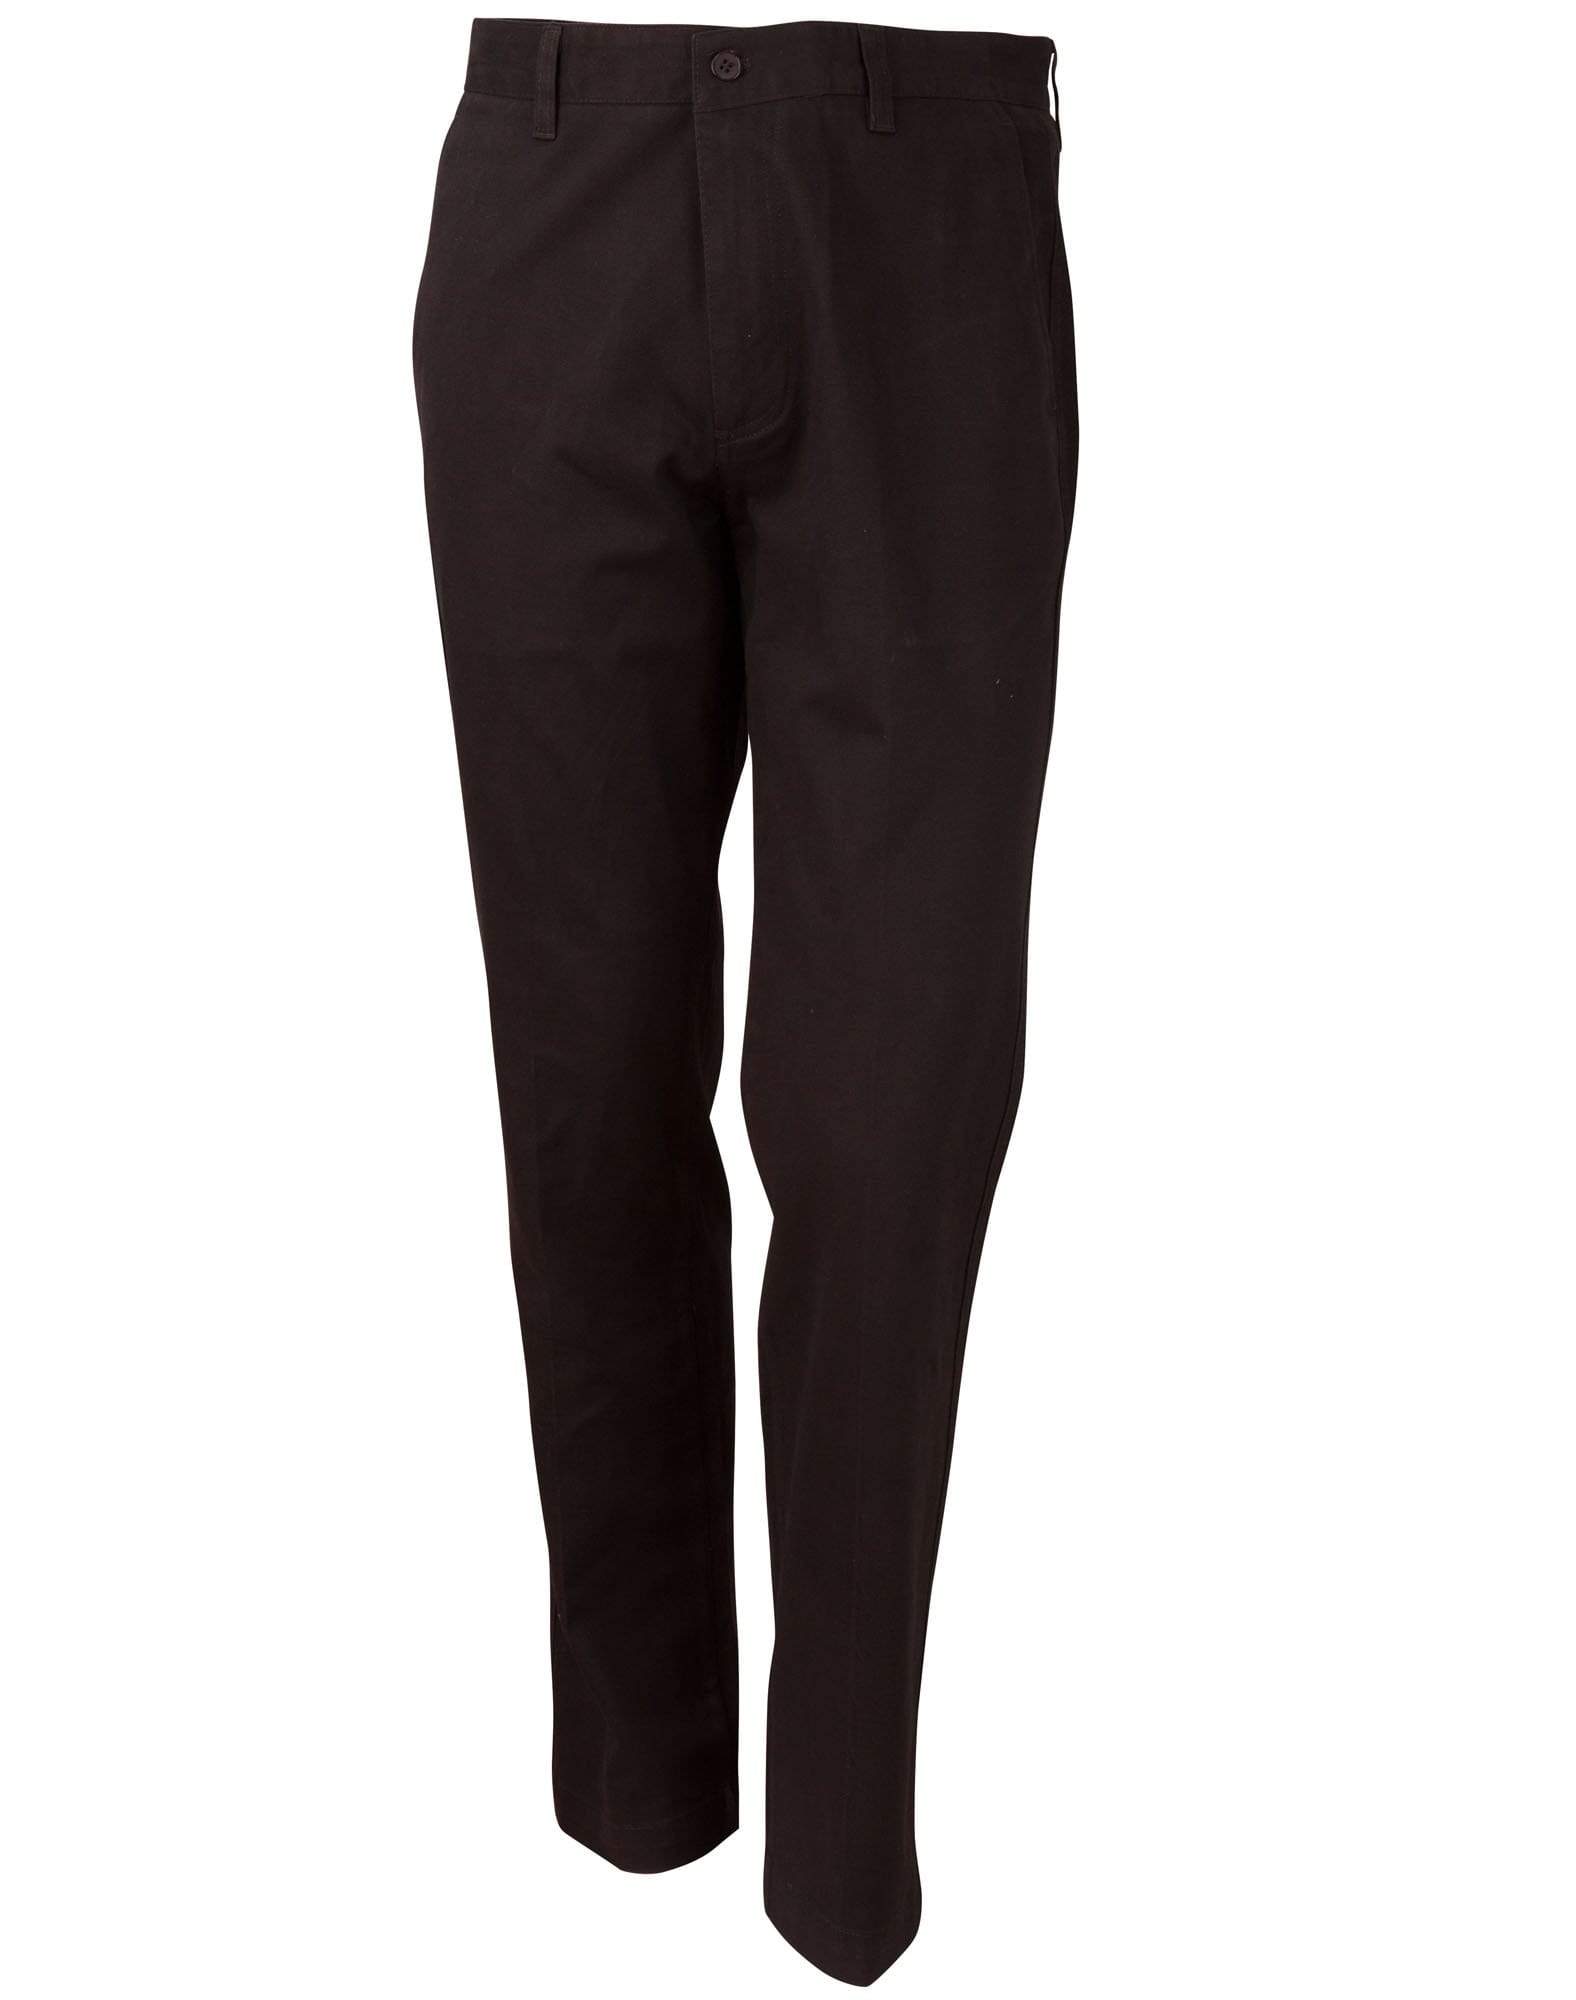 Benchmark Corporate Wear Black / 77 BENCHMARK Men's Chino Pants M9360